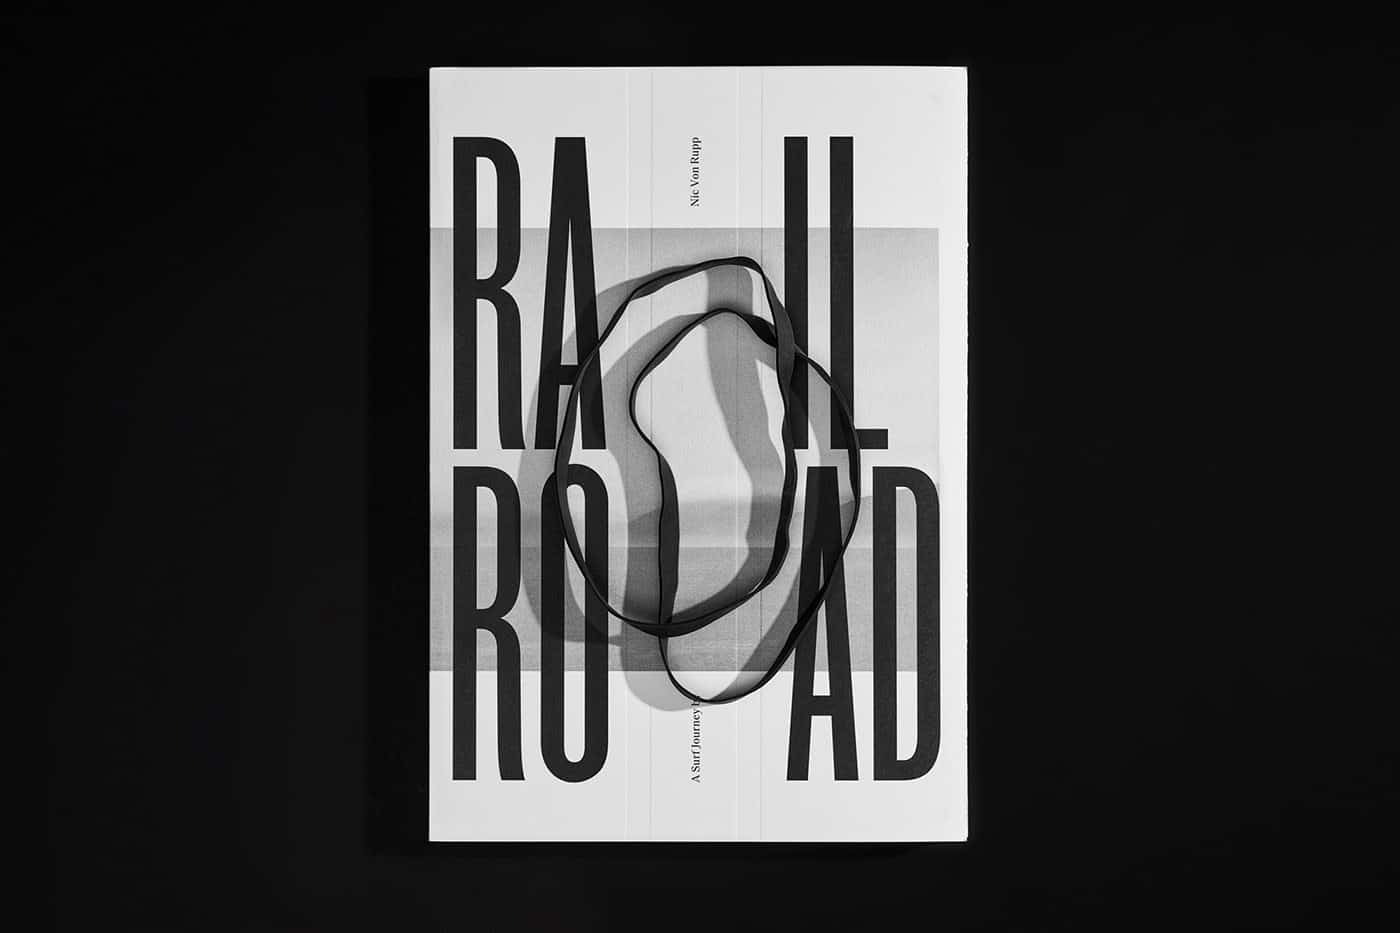 Minimal Black and White Typographic Poster Design – Rail Road